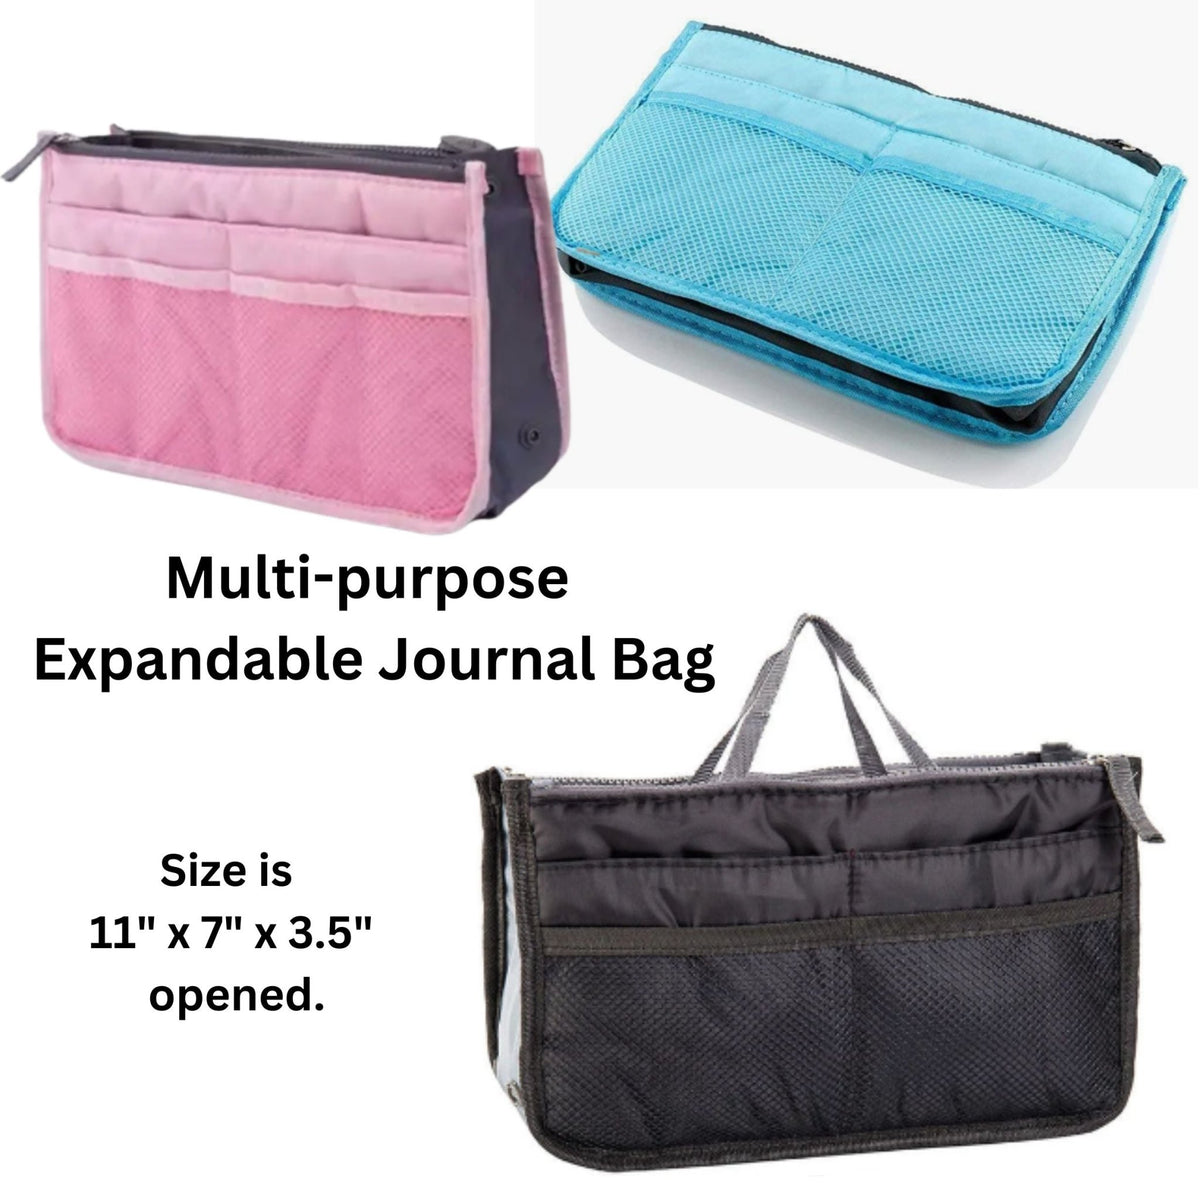 Multi-purpose Expandable Journal Bag